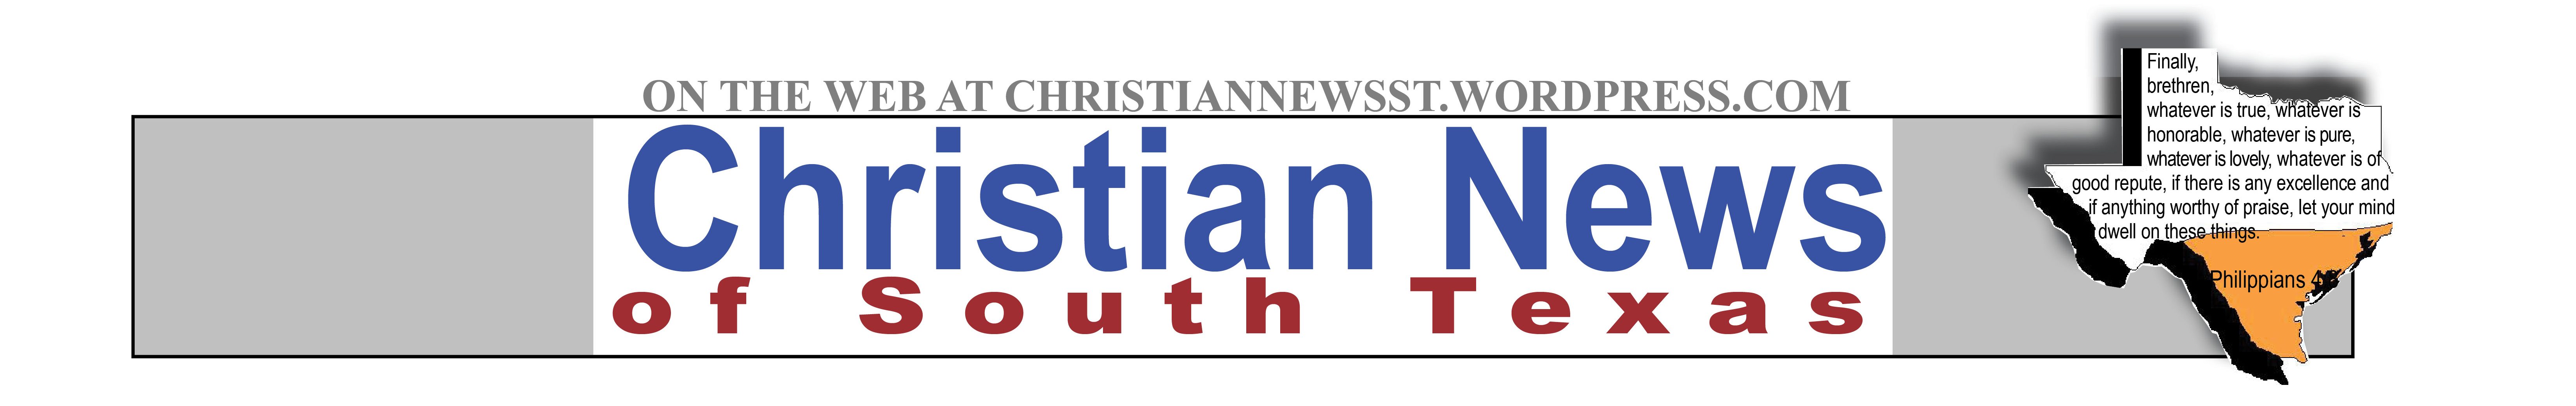 Christian News of South Texas